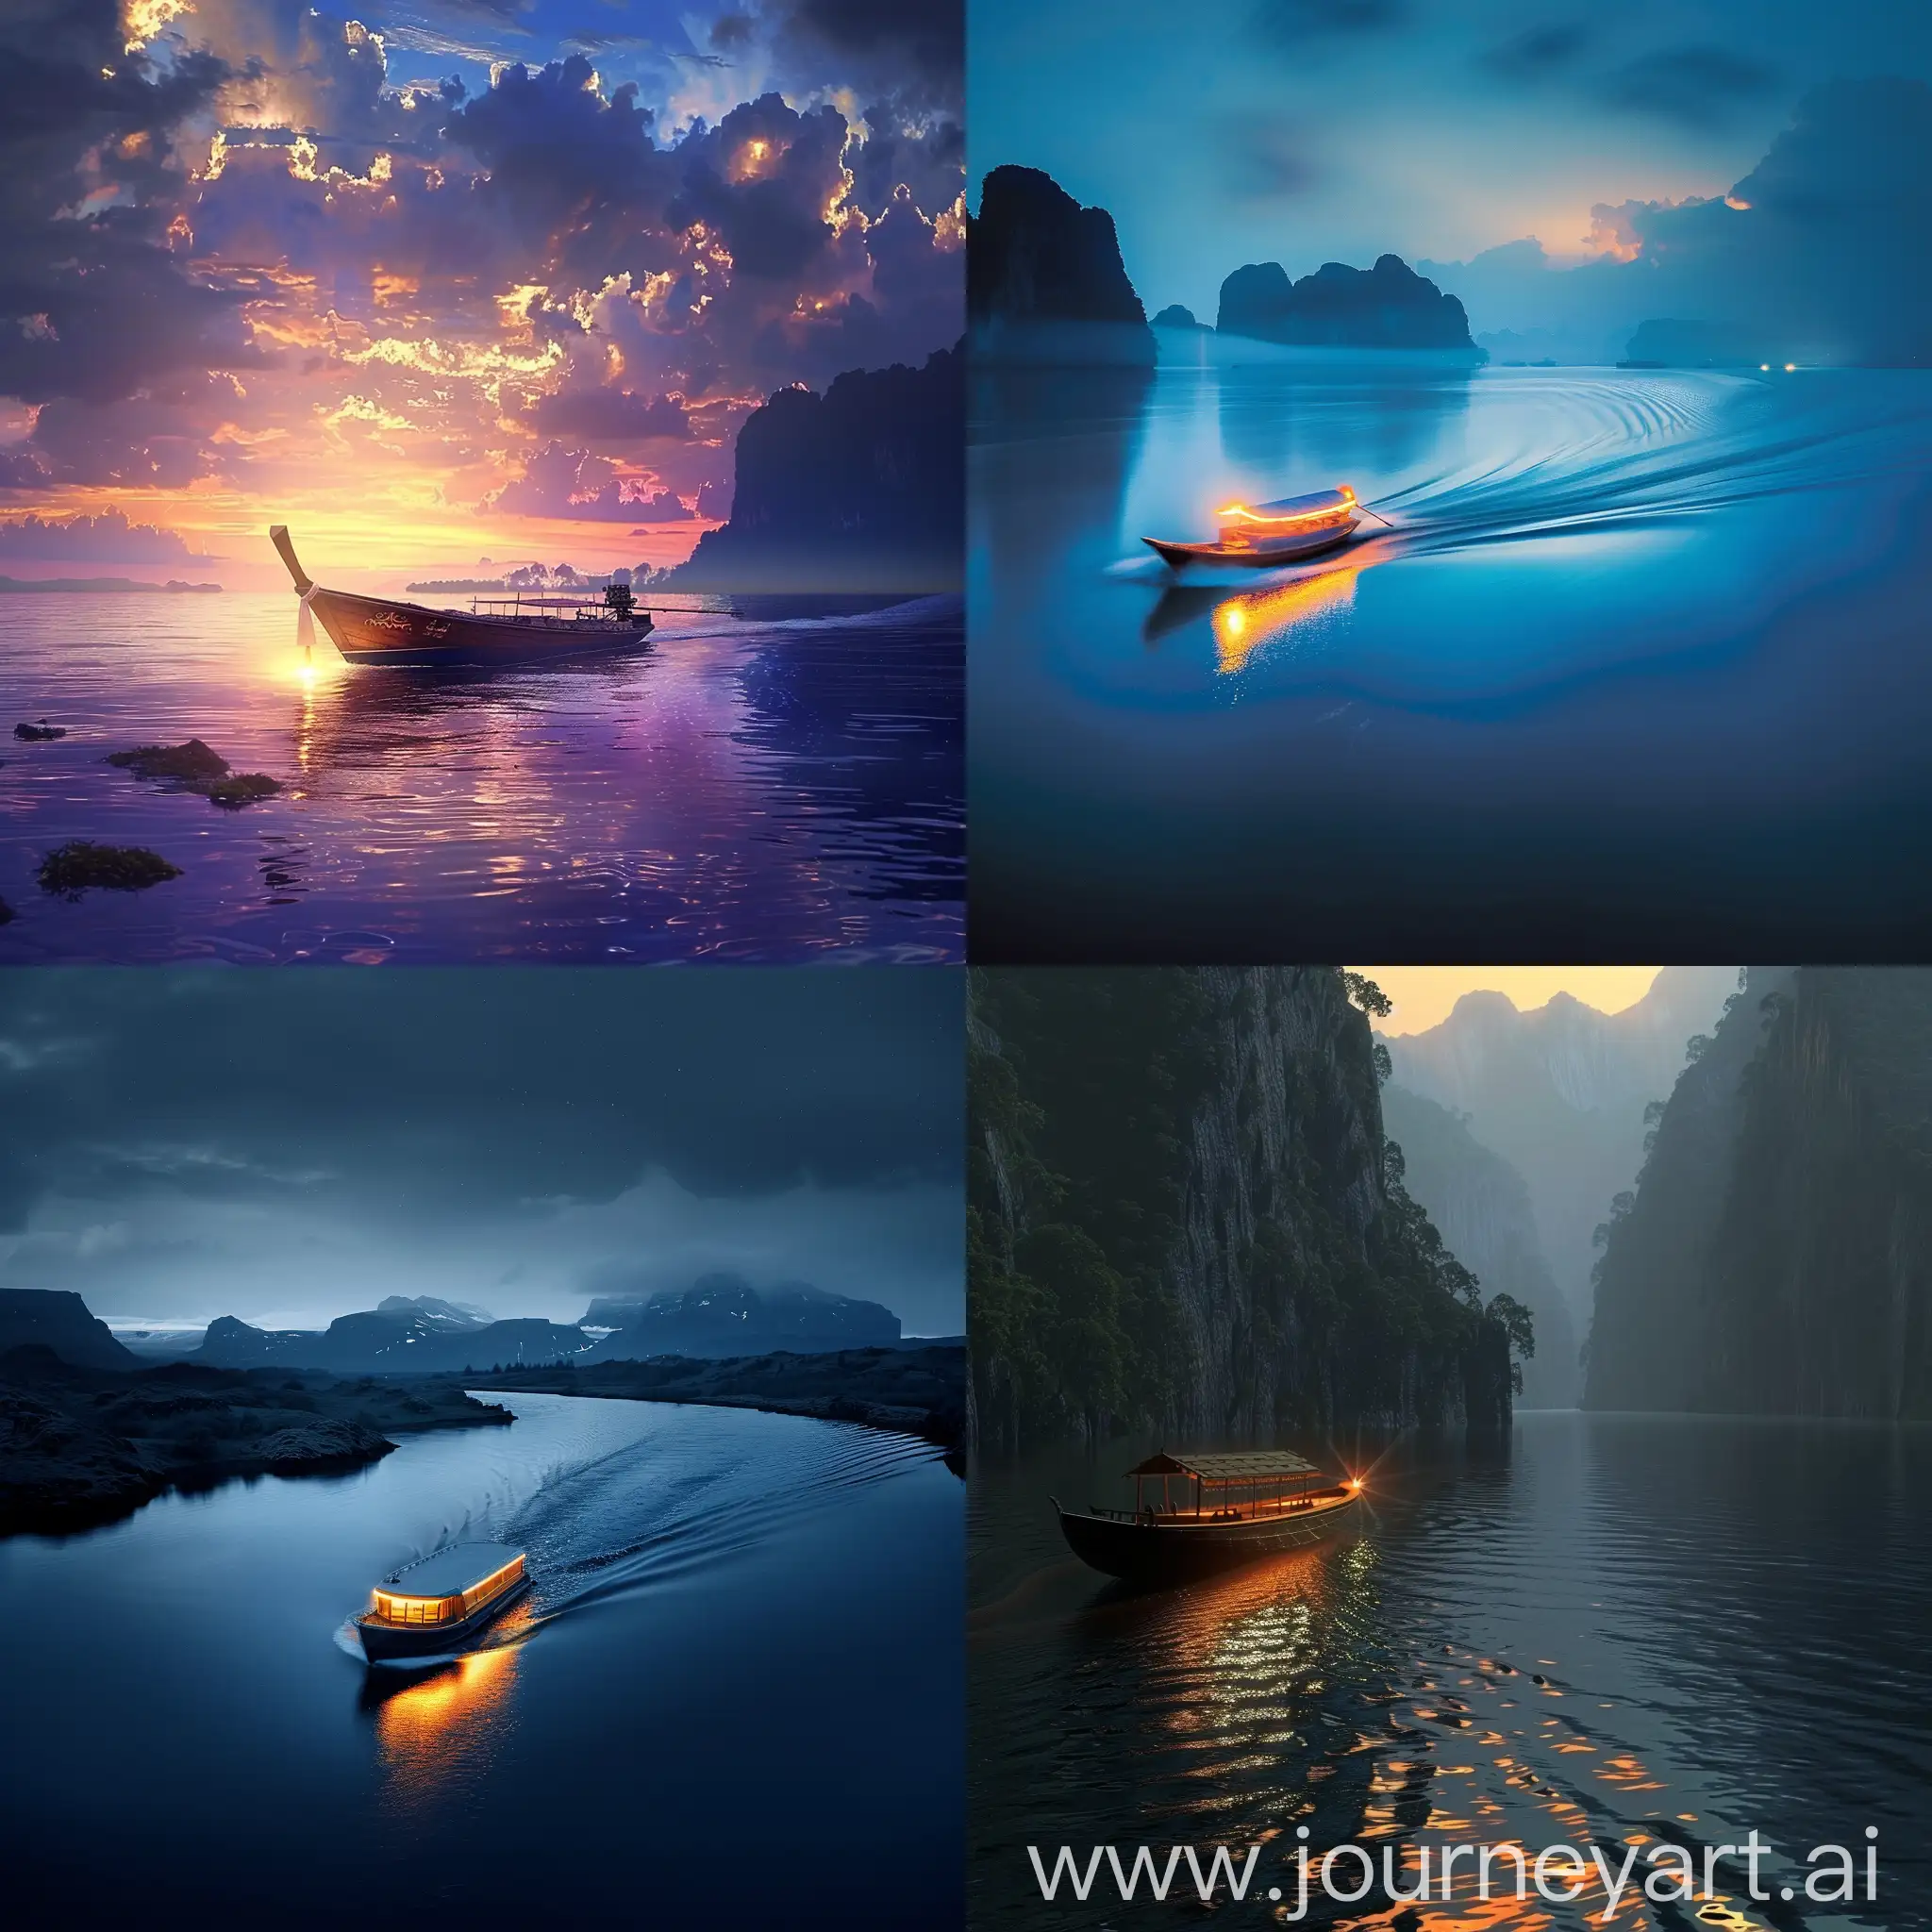 Glowing-Light-Boat-Journeying-Through-Dusk-Landscape